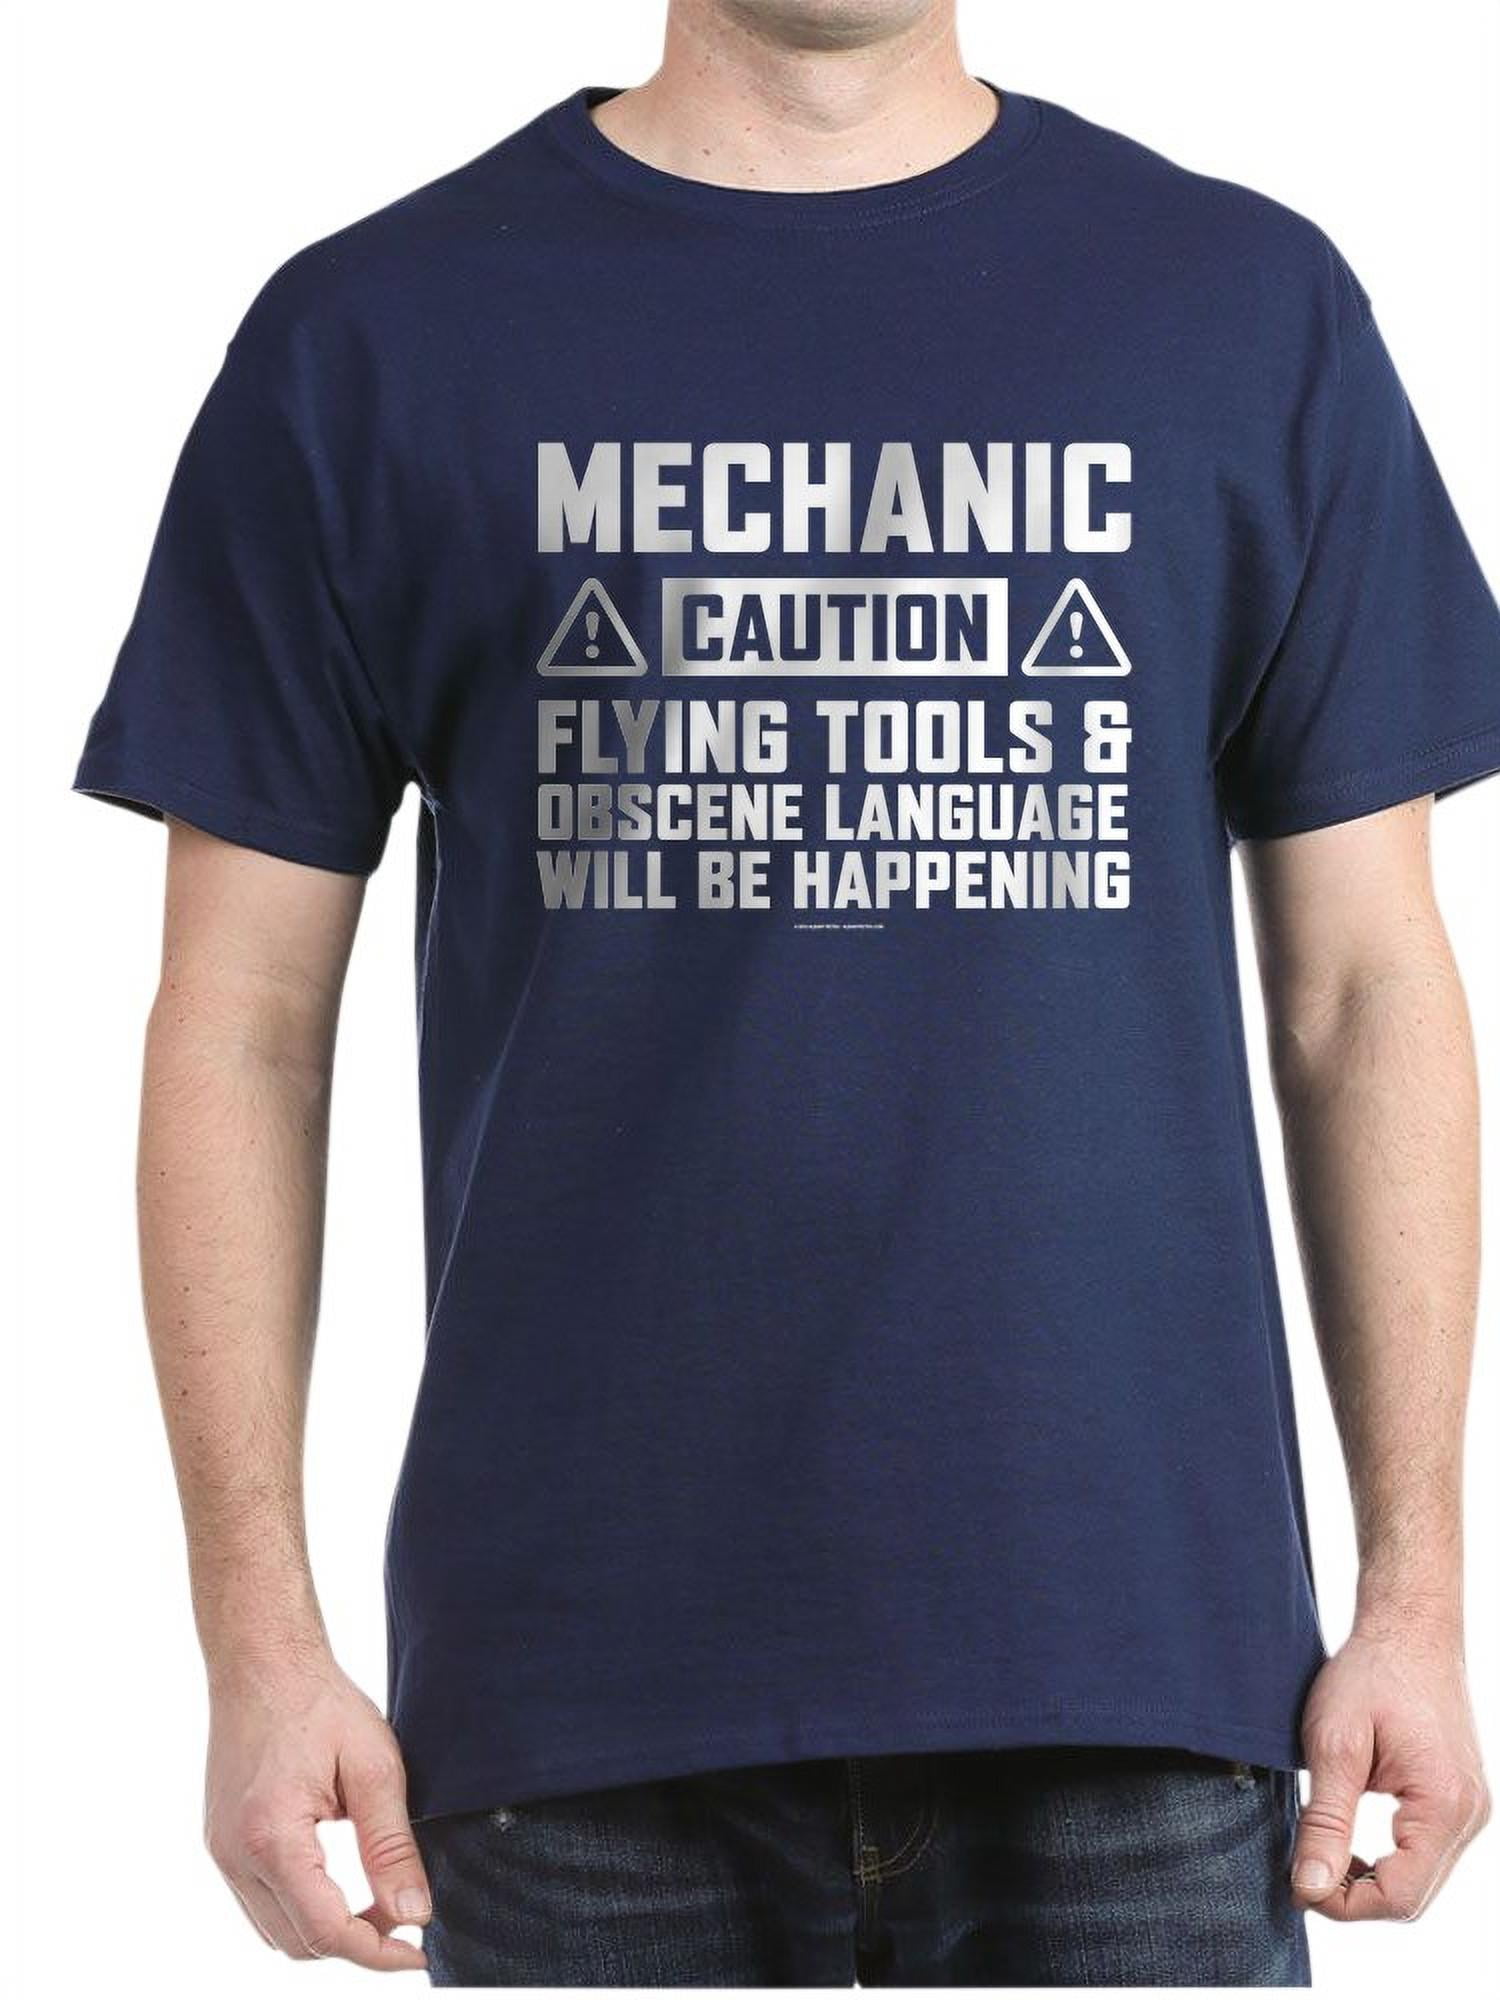 The Garage Is Calling I Must Go Funny Mechanic Mens Unisex T-Shirt